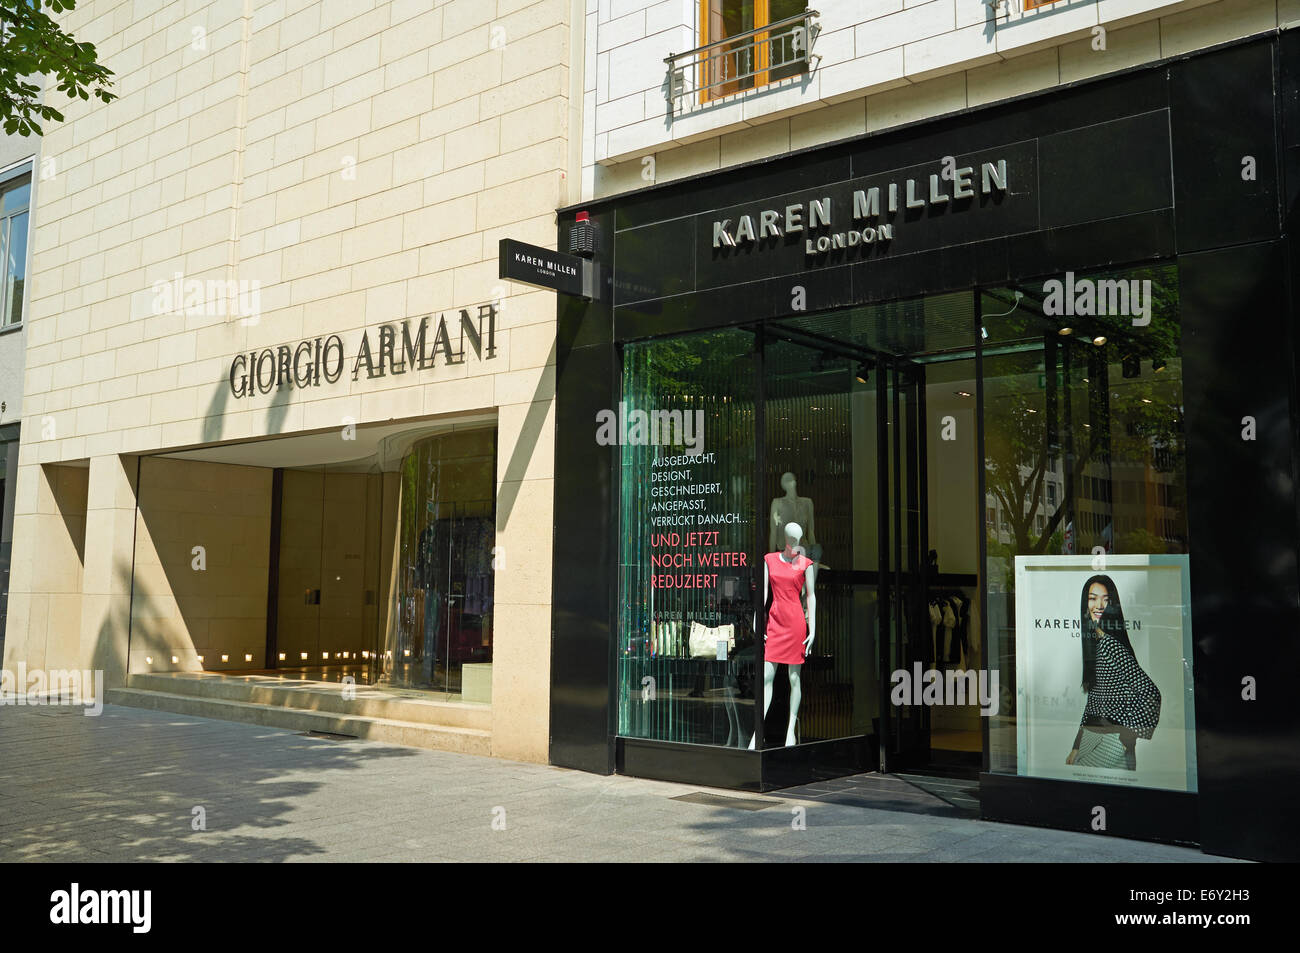 Karen Millen clothes shop, Konigsallee, Dusseldorf, Germany Stock Photo -  Alamy